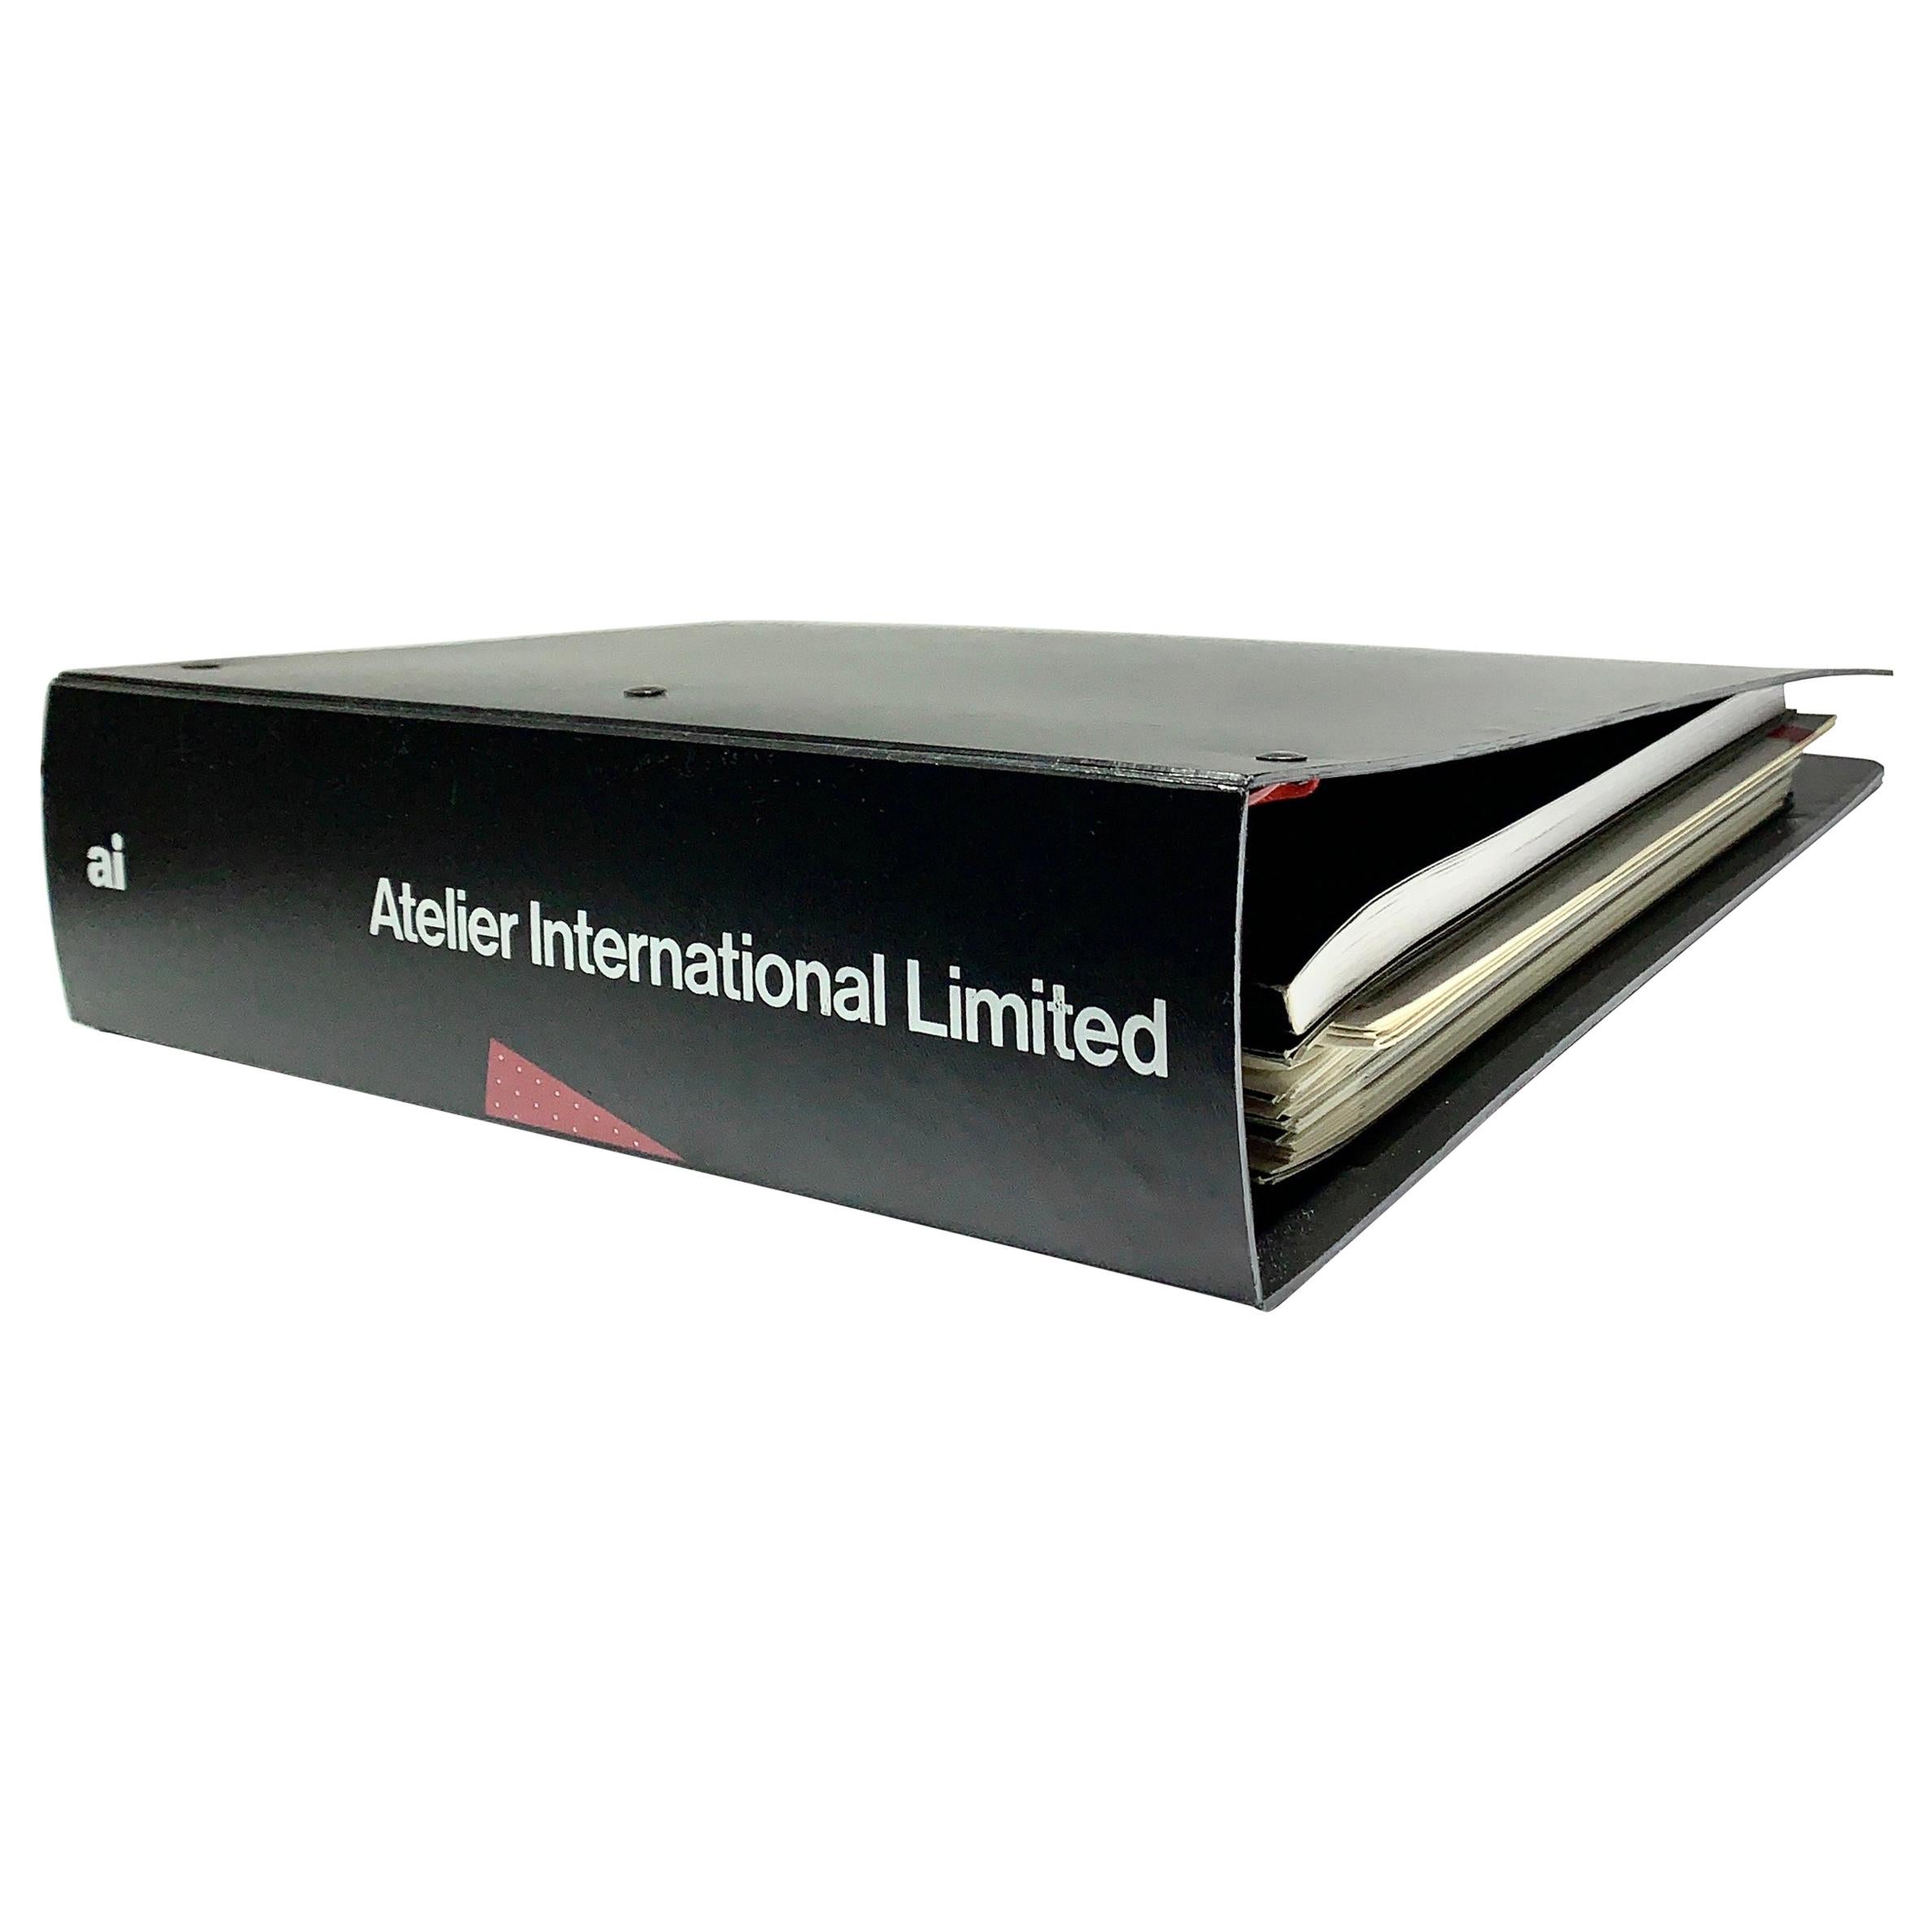 Atelier International Limited & Cassina Trade Catalogue Binder, 1988